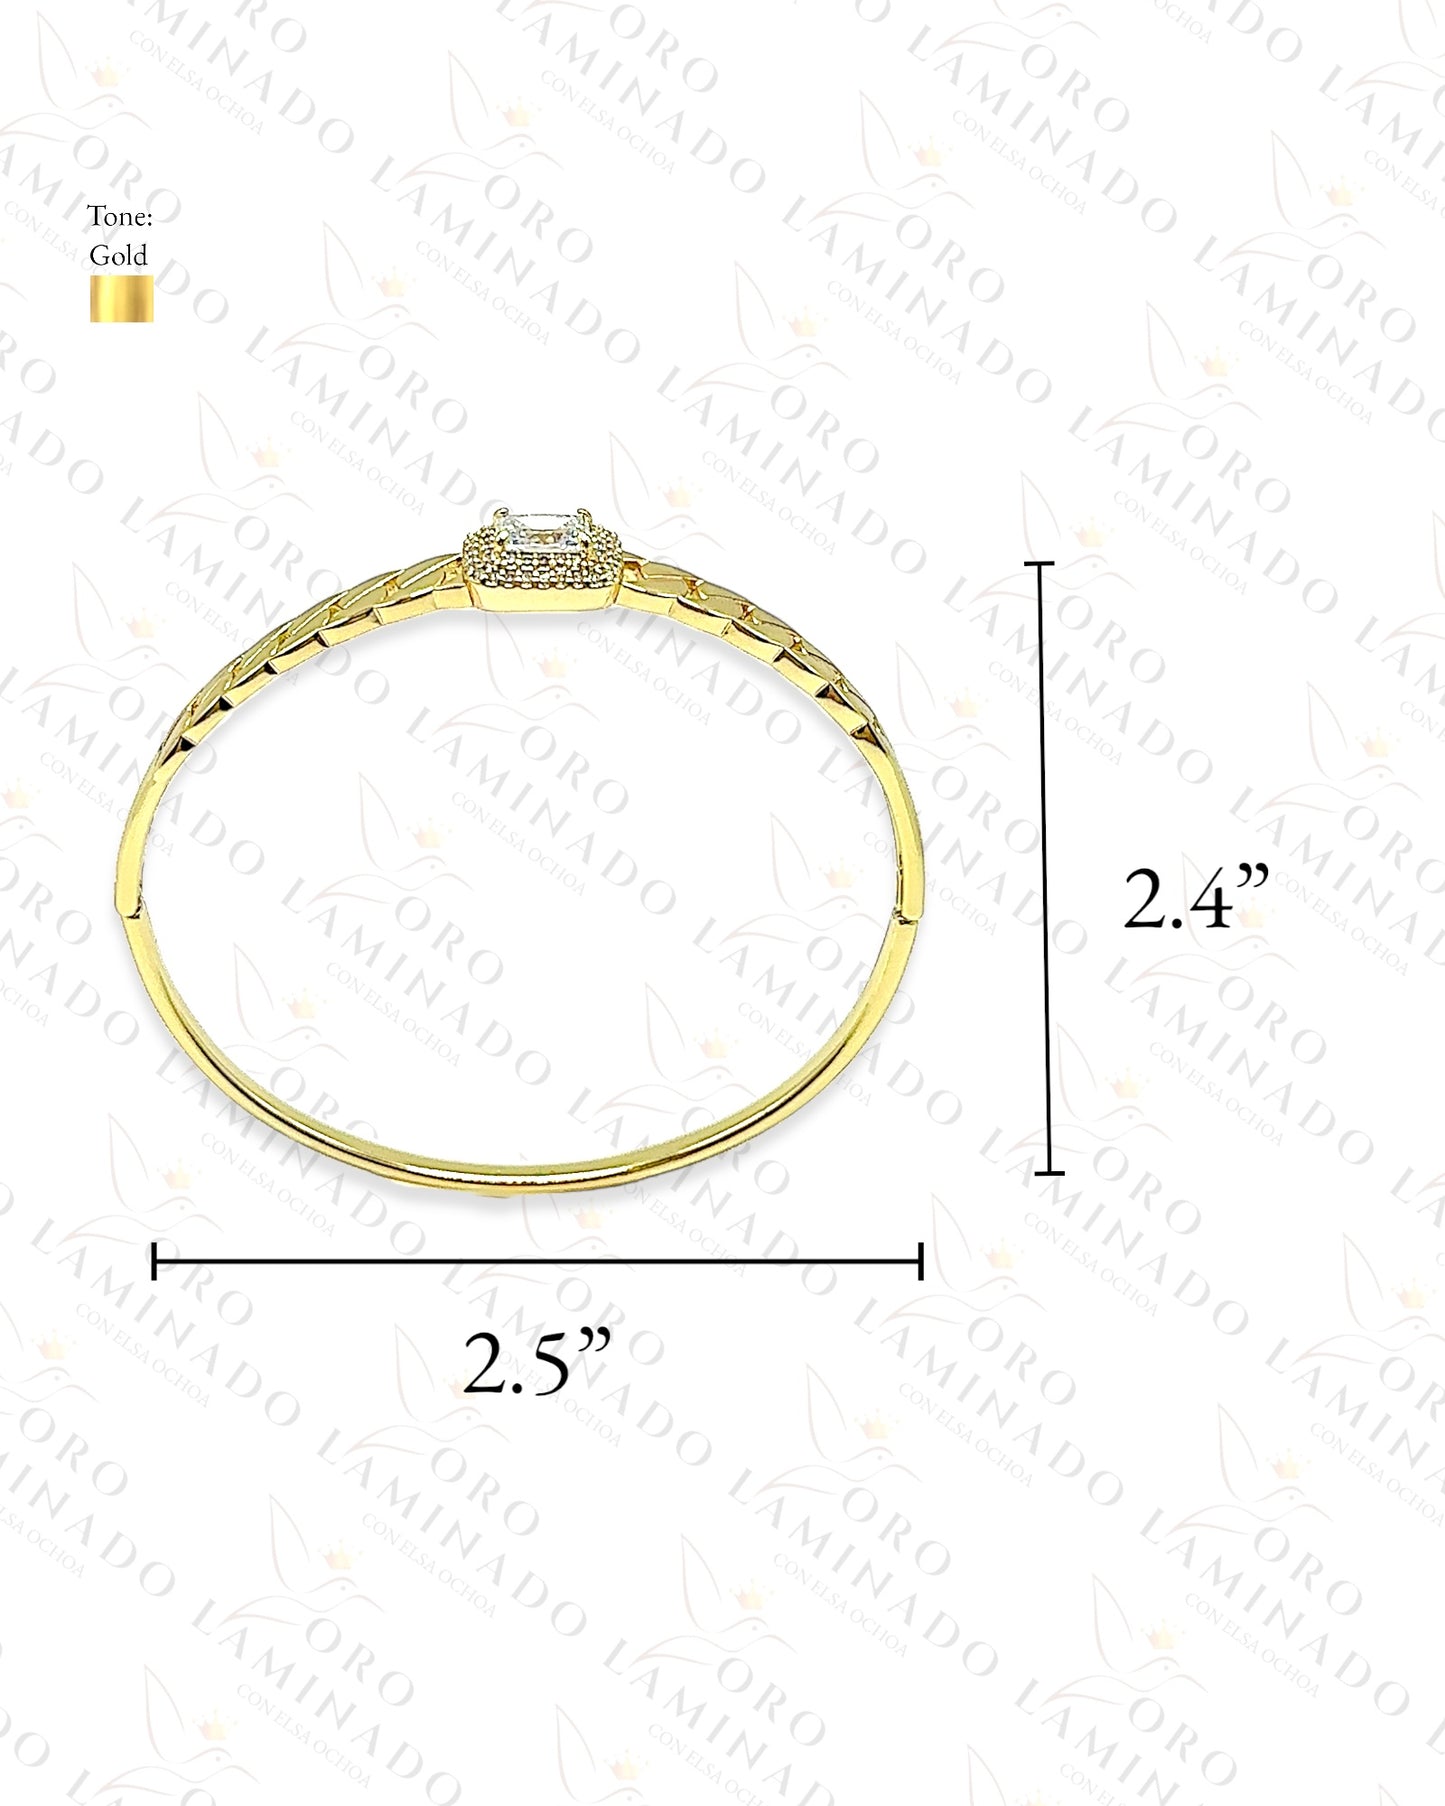 High Quality Square Diamond Bangle Bracelet Y394